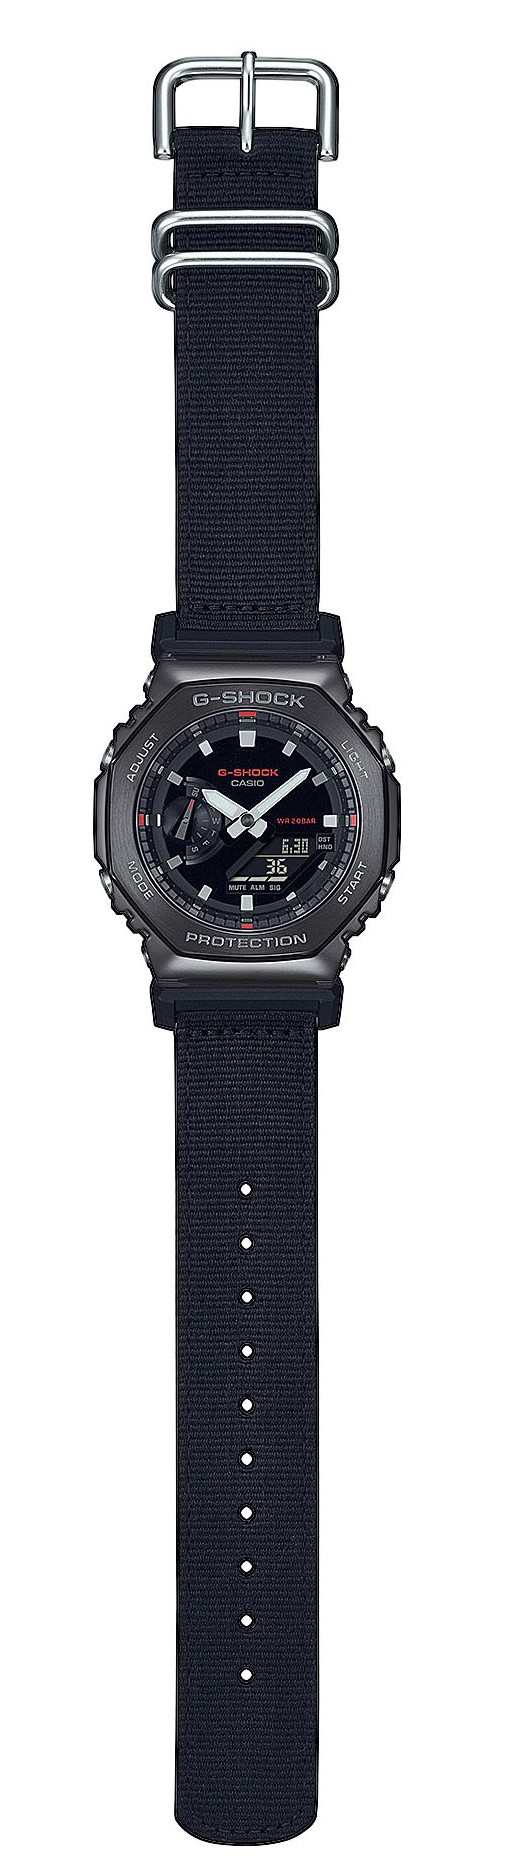 Casio Herren Armbanduhr G-Shock GM-2100CB-1AER Textilband schwarz analog digital